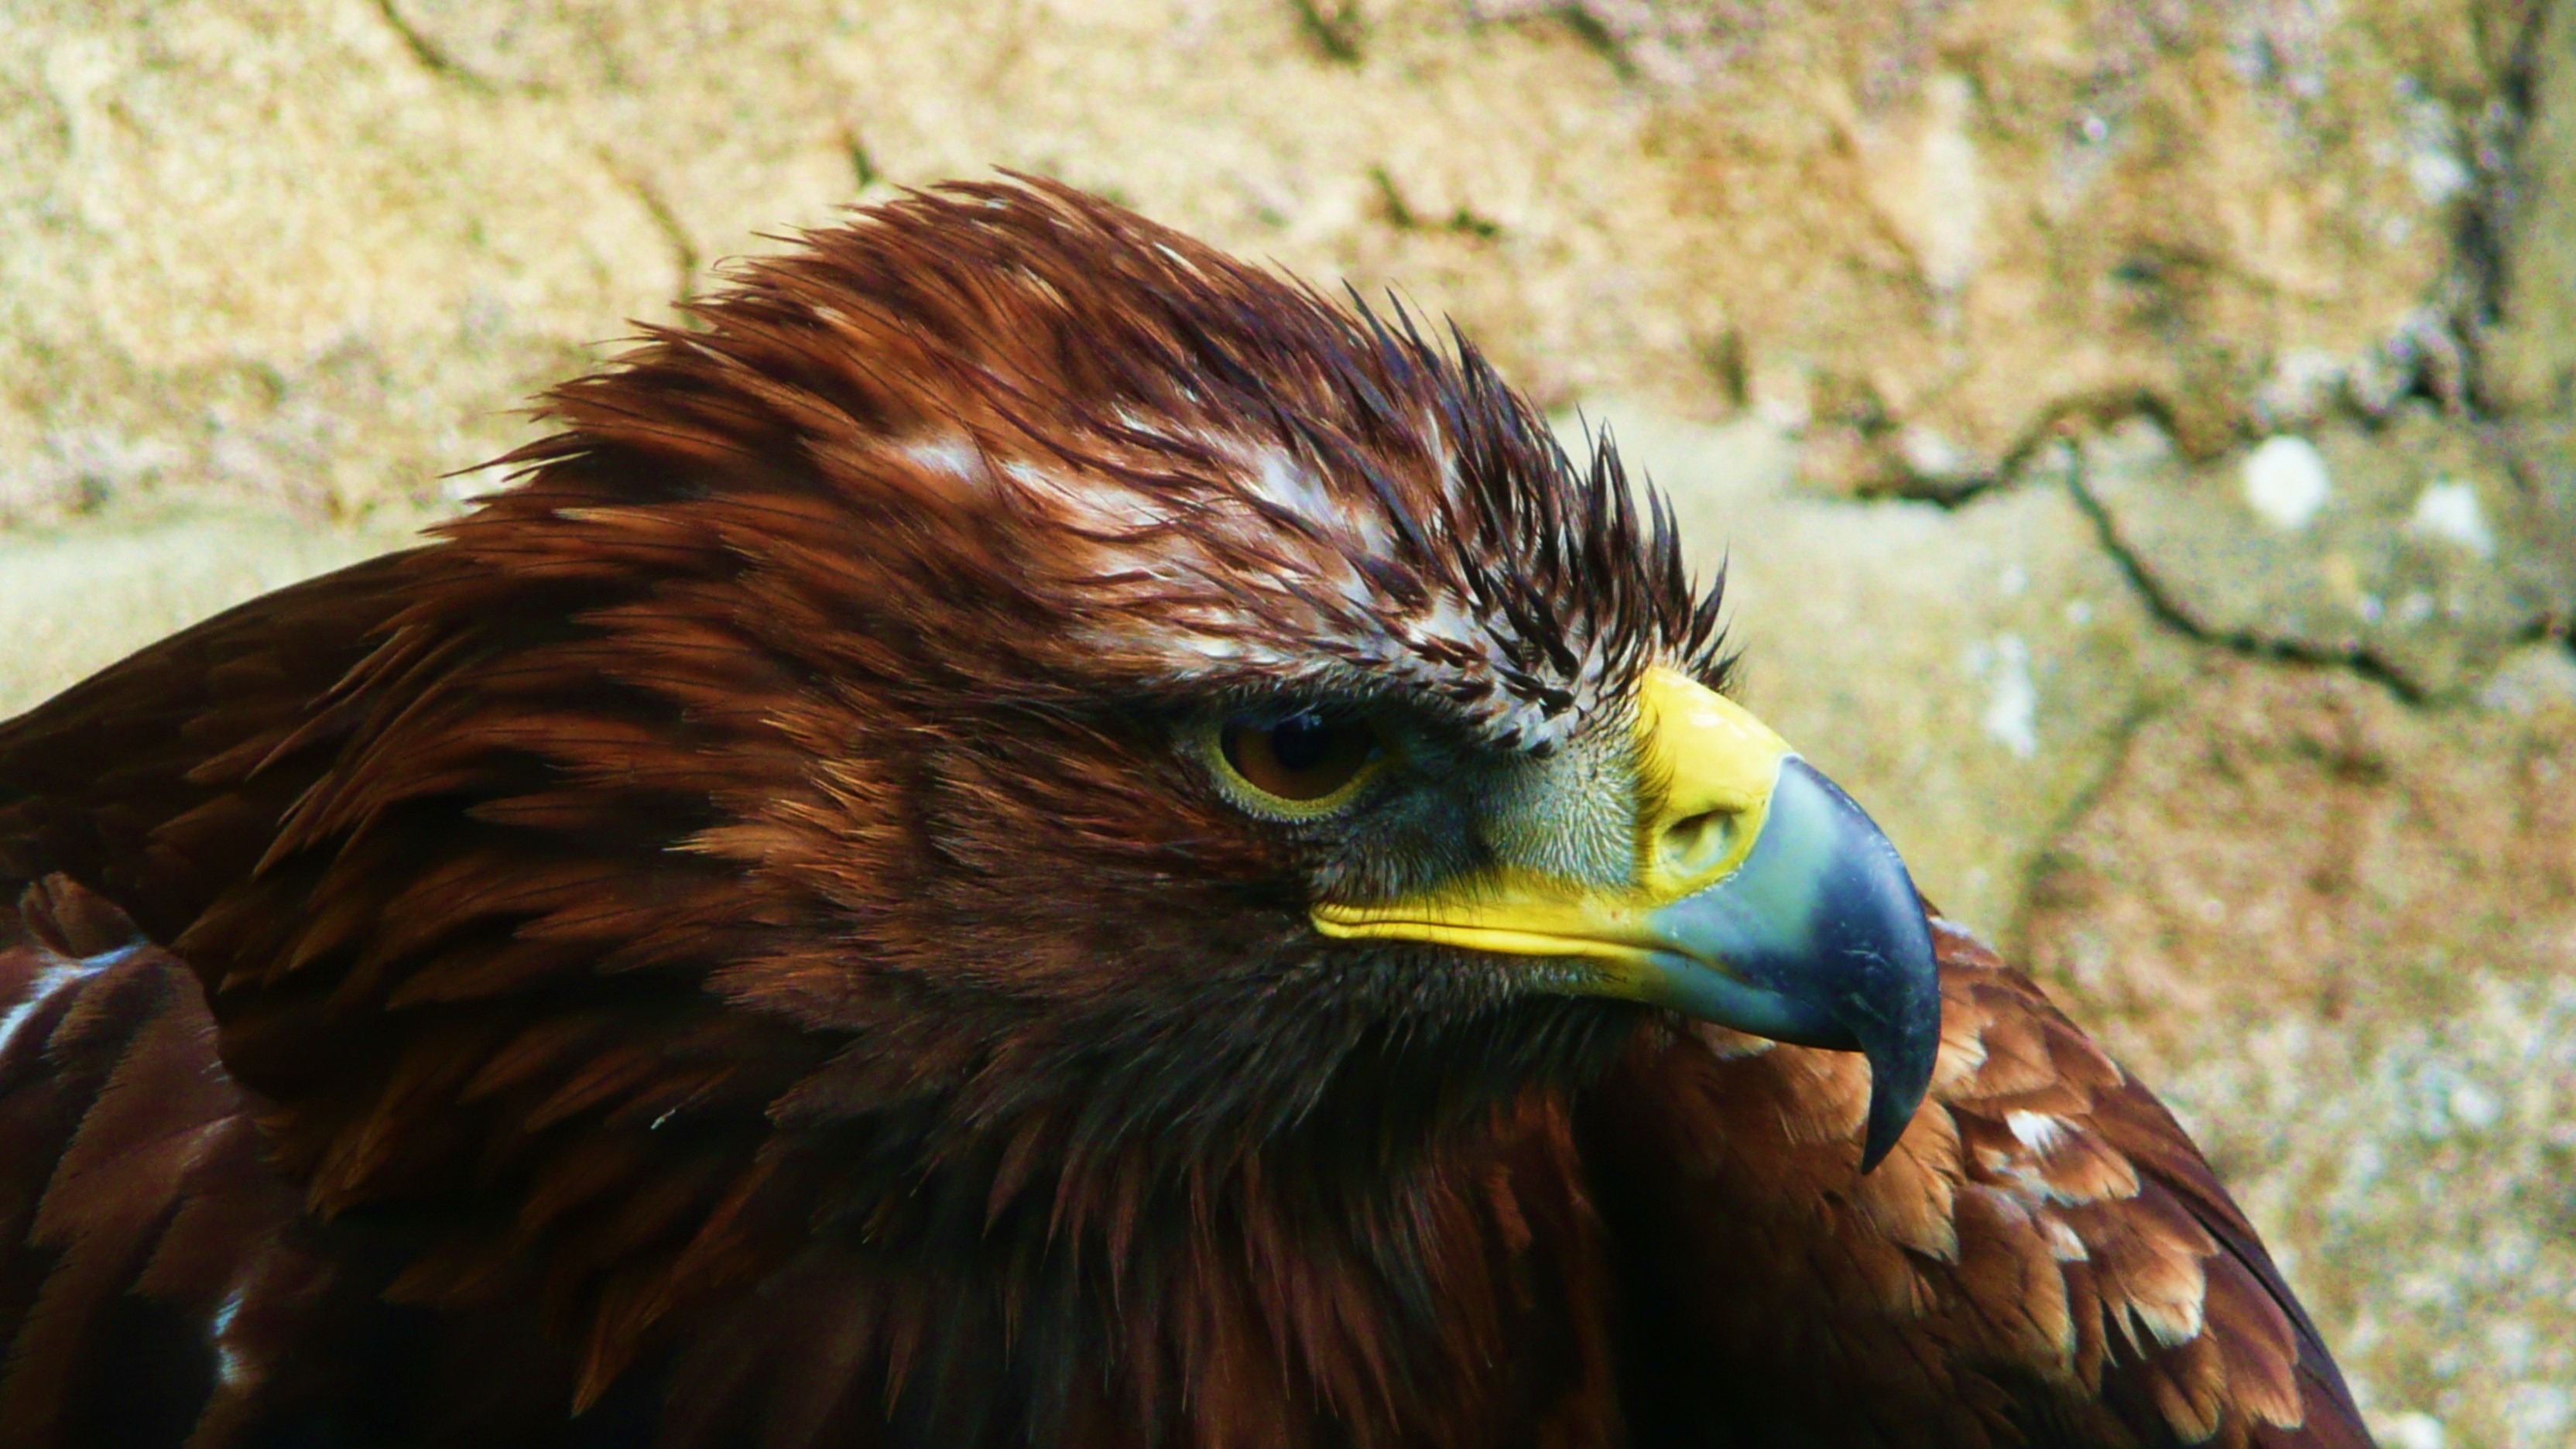 Wild eagle photo